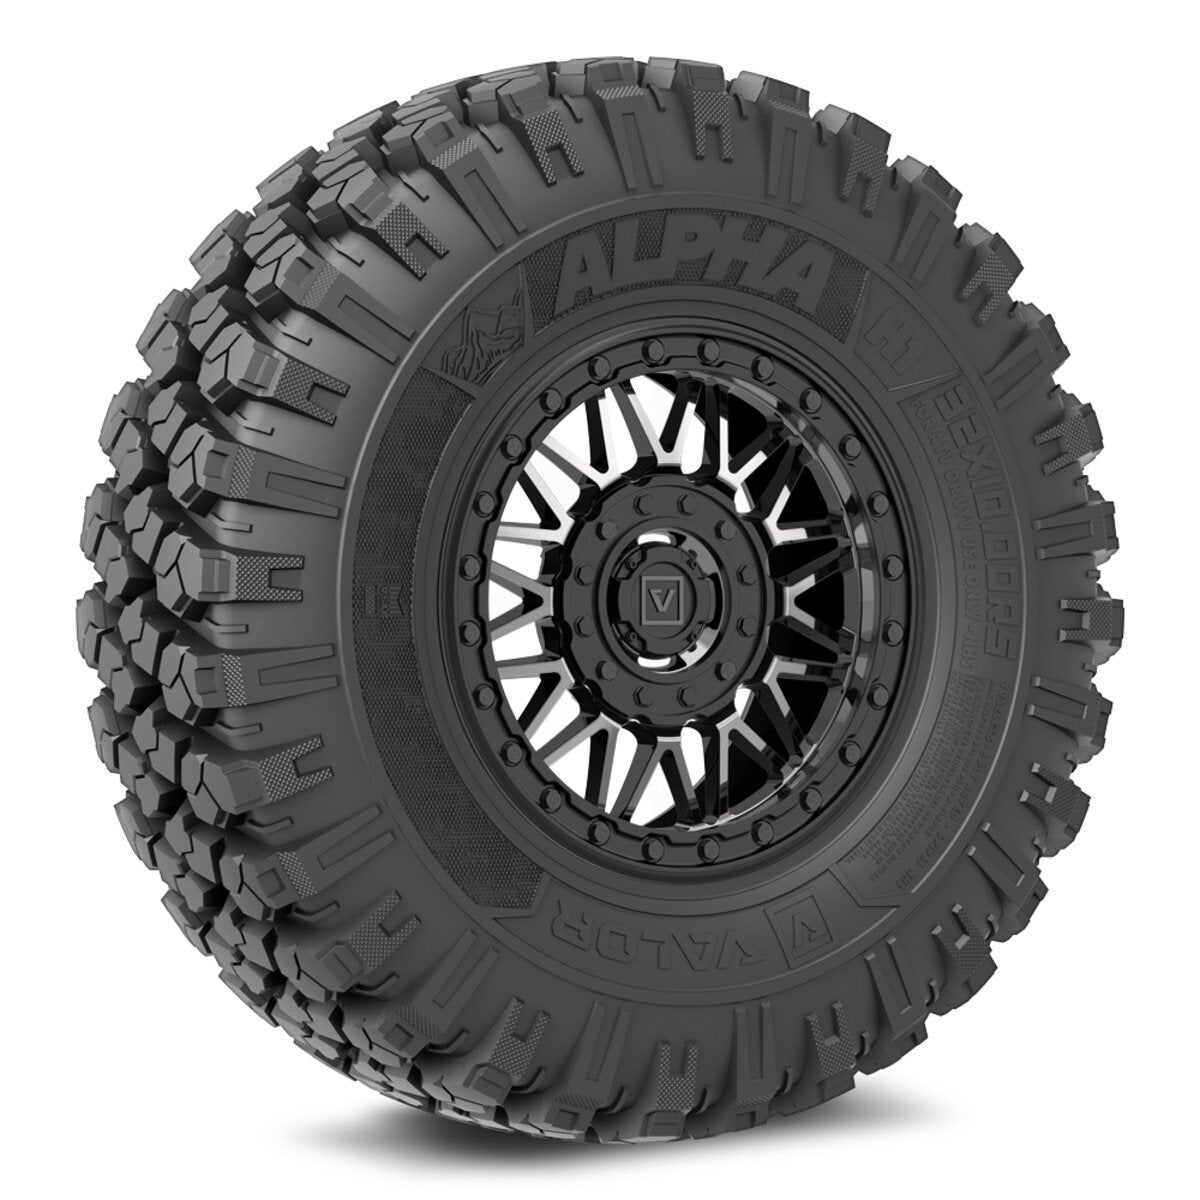 Valor Off-Road Alpha on V08 DT Wheel and Tire Kits